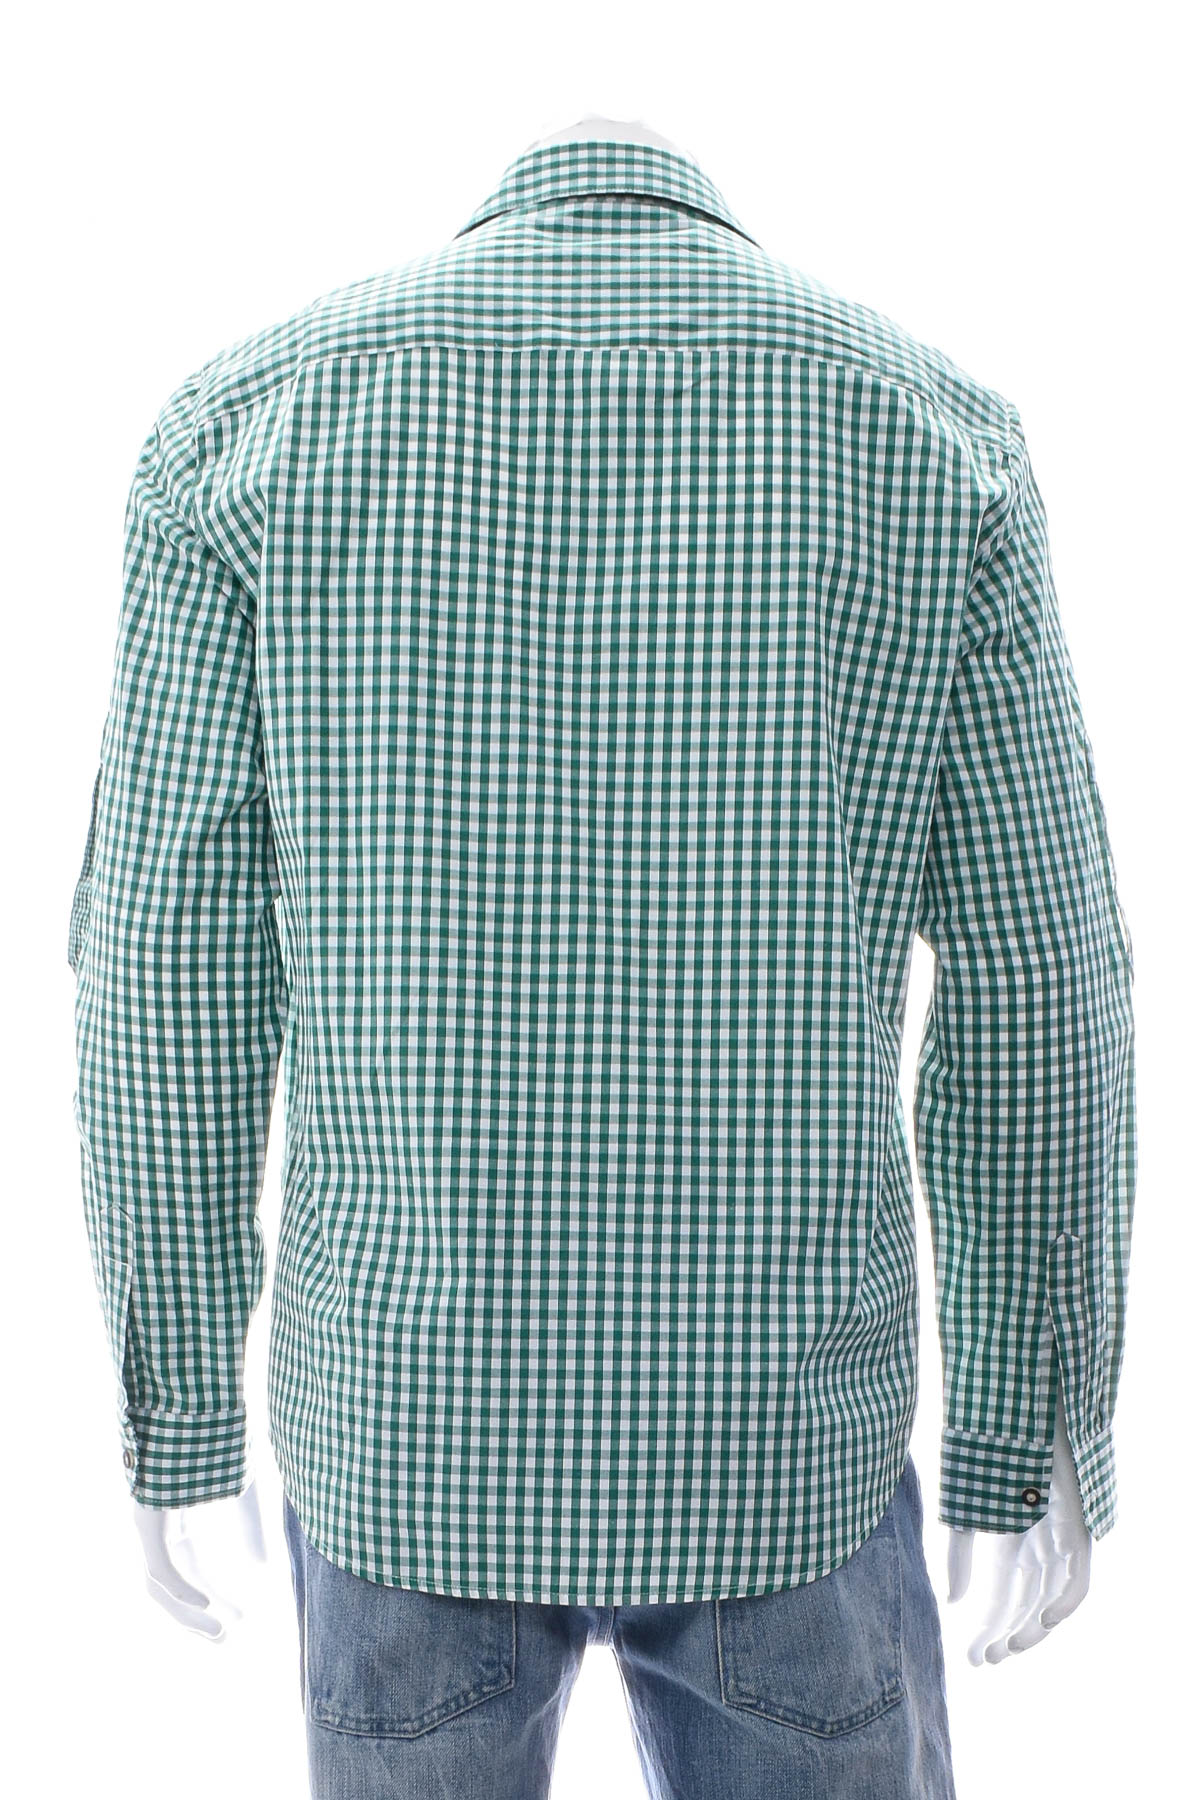 Men's shirt - STOCKERPOINT - 1